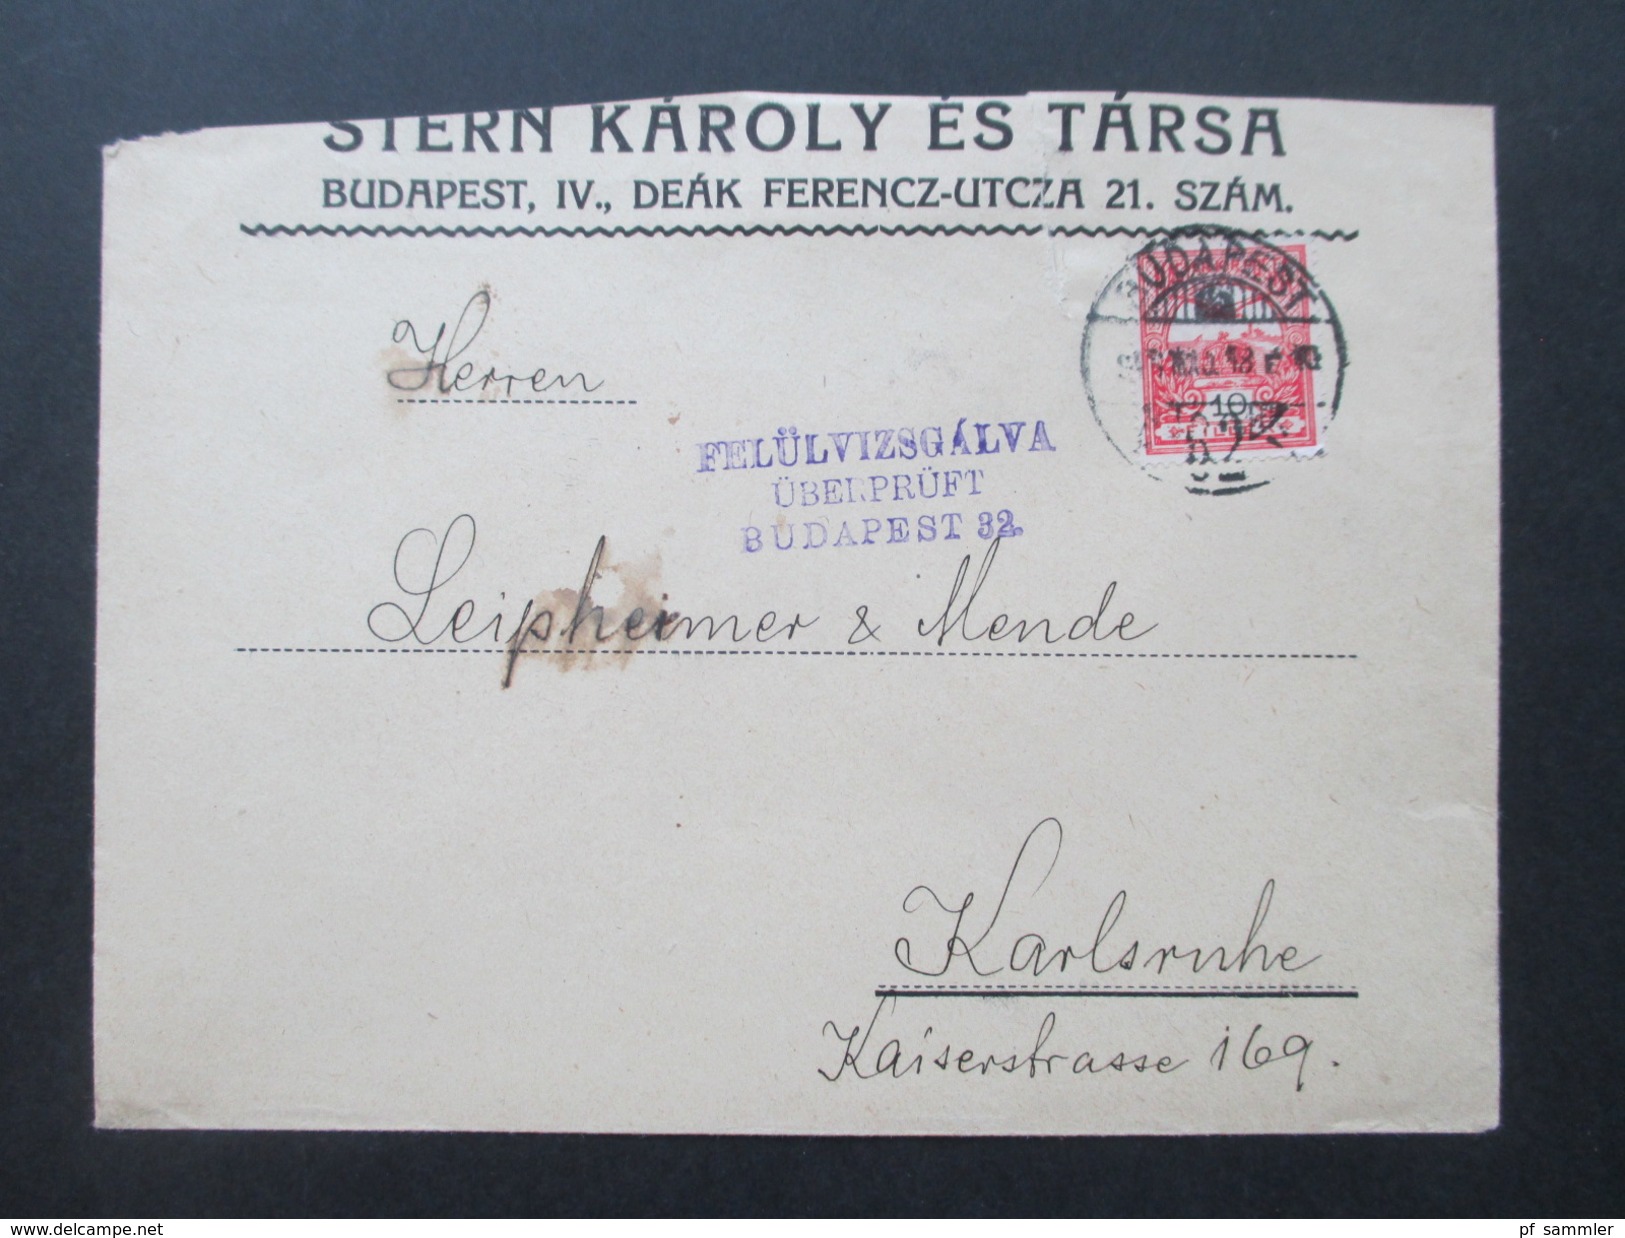 Ungarn 1918 Beleg / Zensutbeleg. Felülvizsgalva überprüft Budapest 32. Nach Karlsruhe. - Lettres & Documents